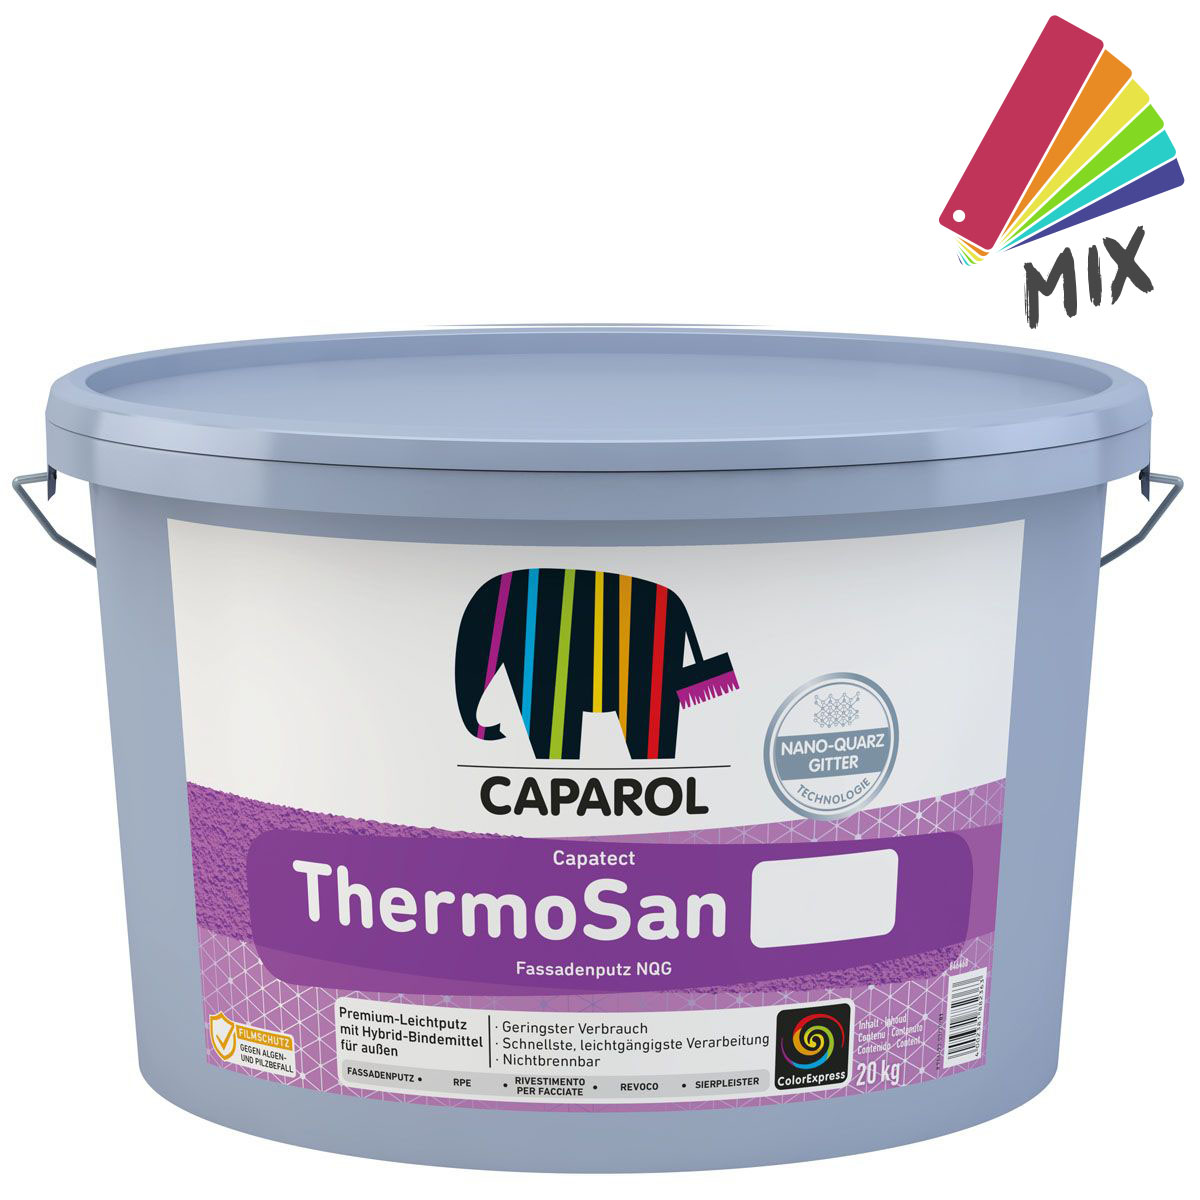 Caparol Capatect Thermosan Fassadenputz NQG K15 (1,5mm) 20kg, PG S wunschfarbton